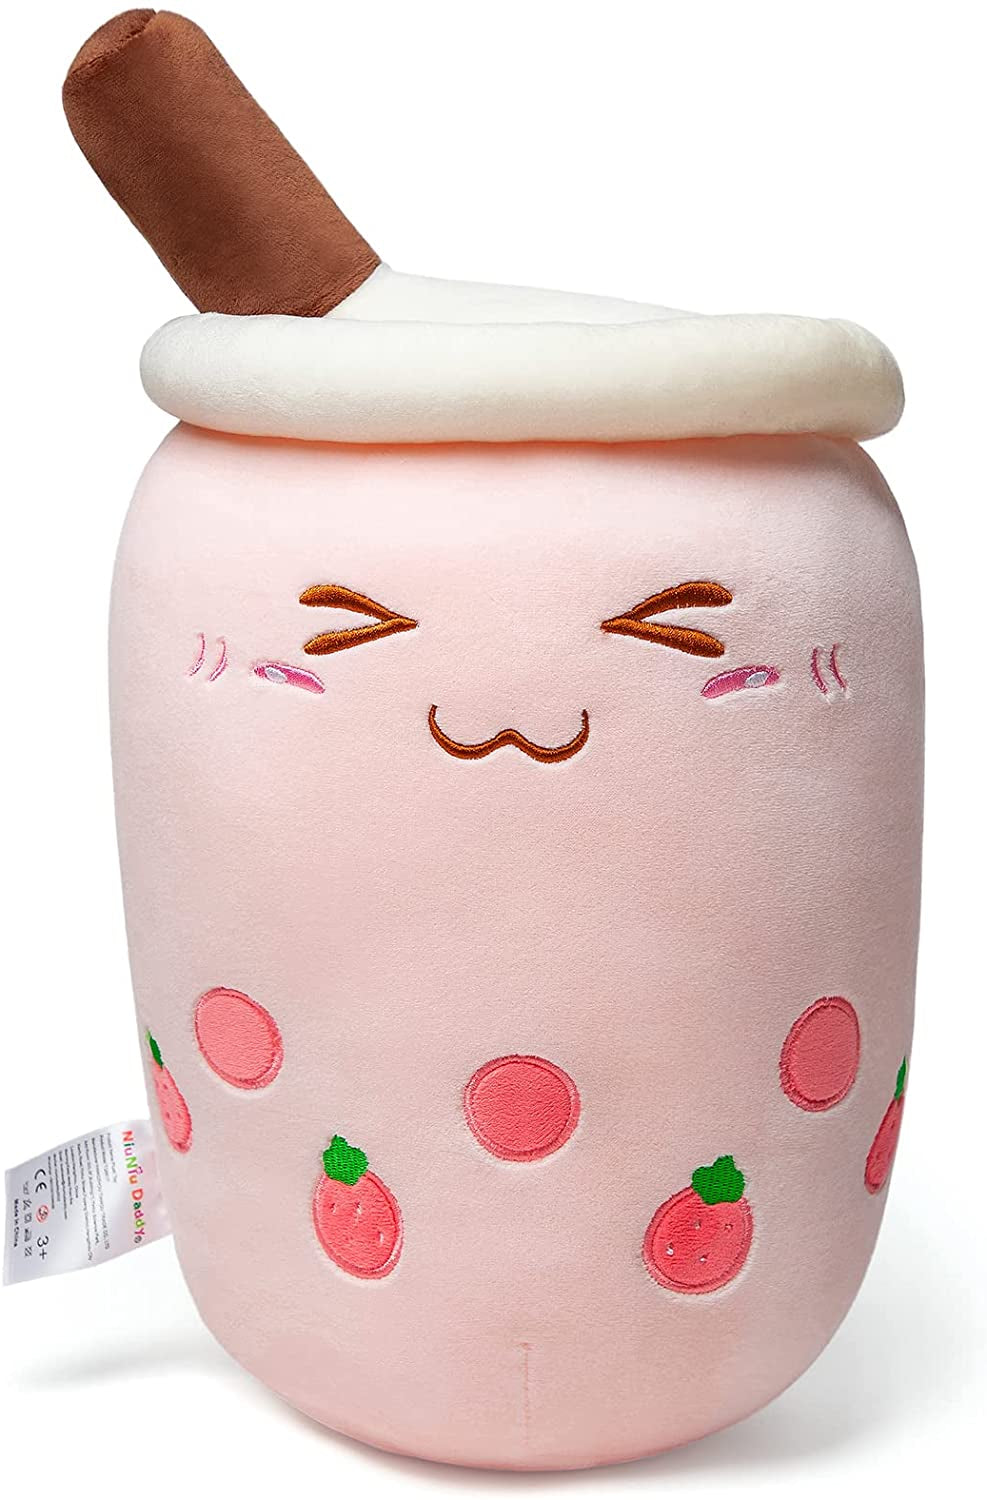 Boba Plush 20In Large Kawaii Plushies Bubble Tea Jumbo Cute Squishy Pillow Soft Stuffed Animal for Kids/Girls/Boys